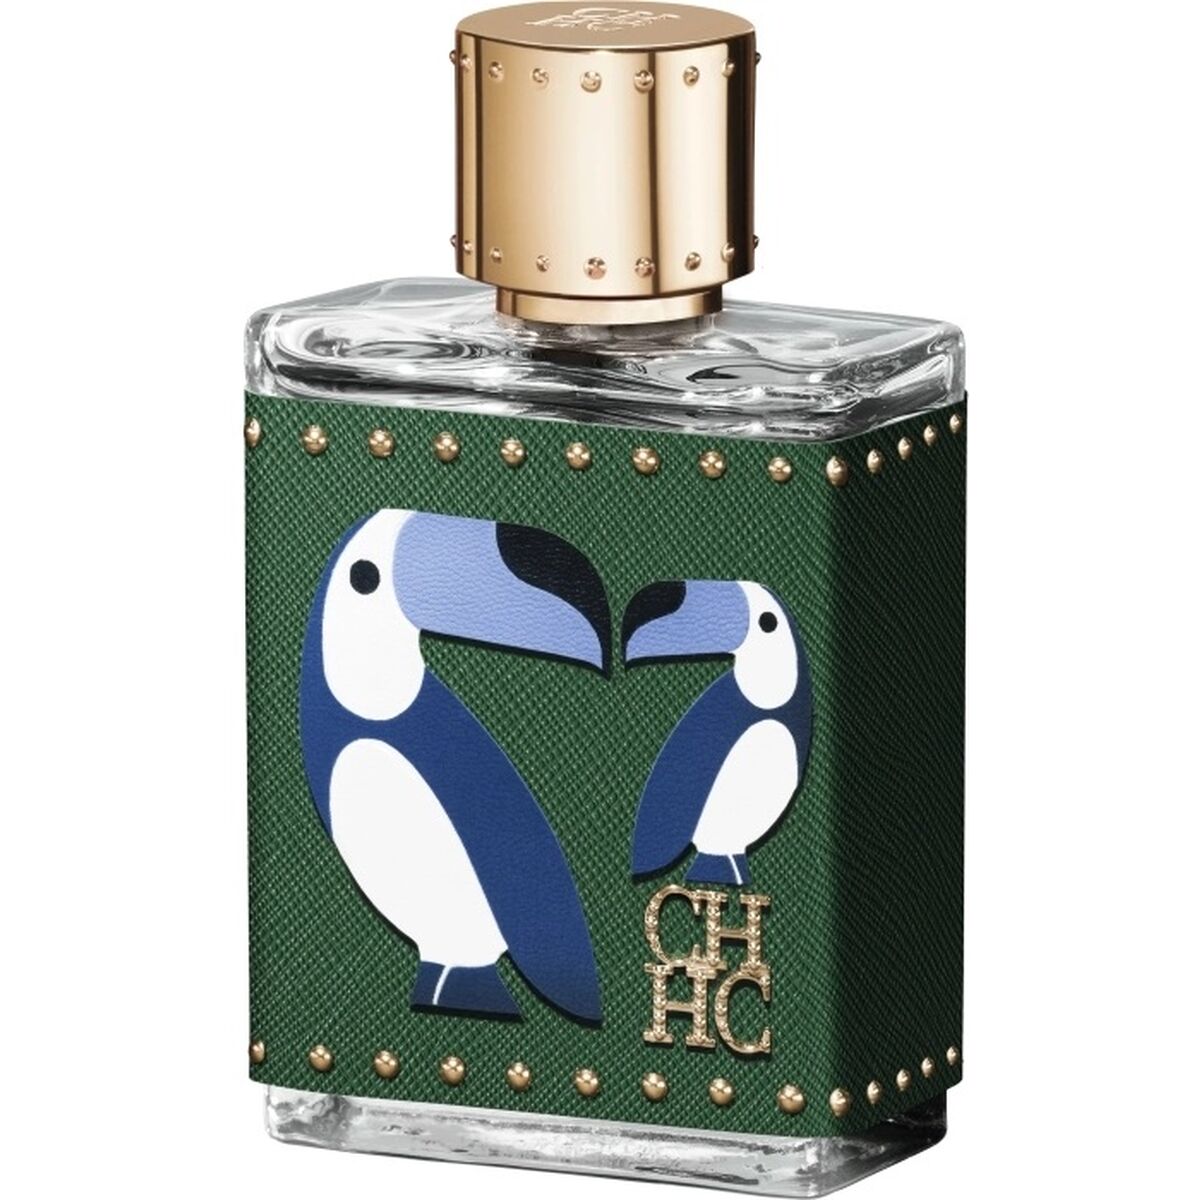 Men's Perfume Carolina Herrera CH Birds Of Paradise EDP 100 ml Limited edition